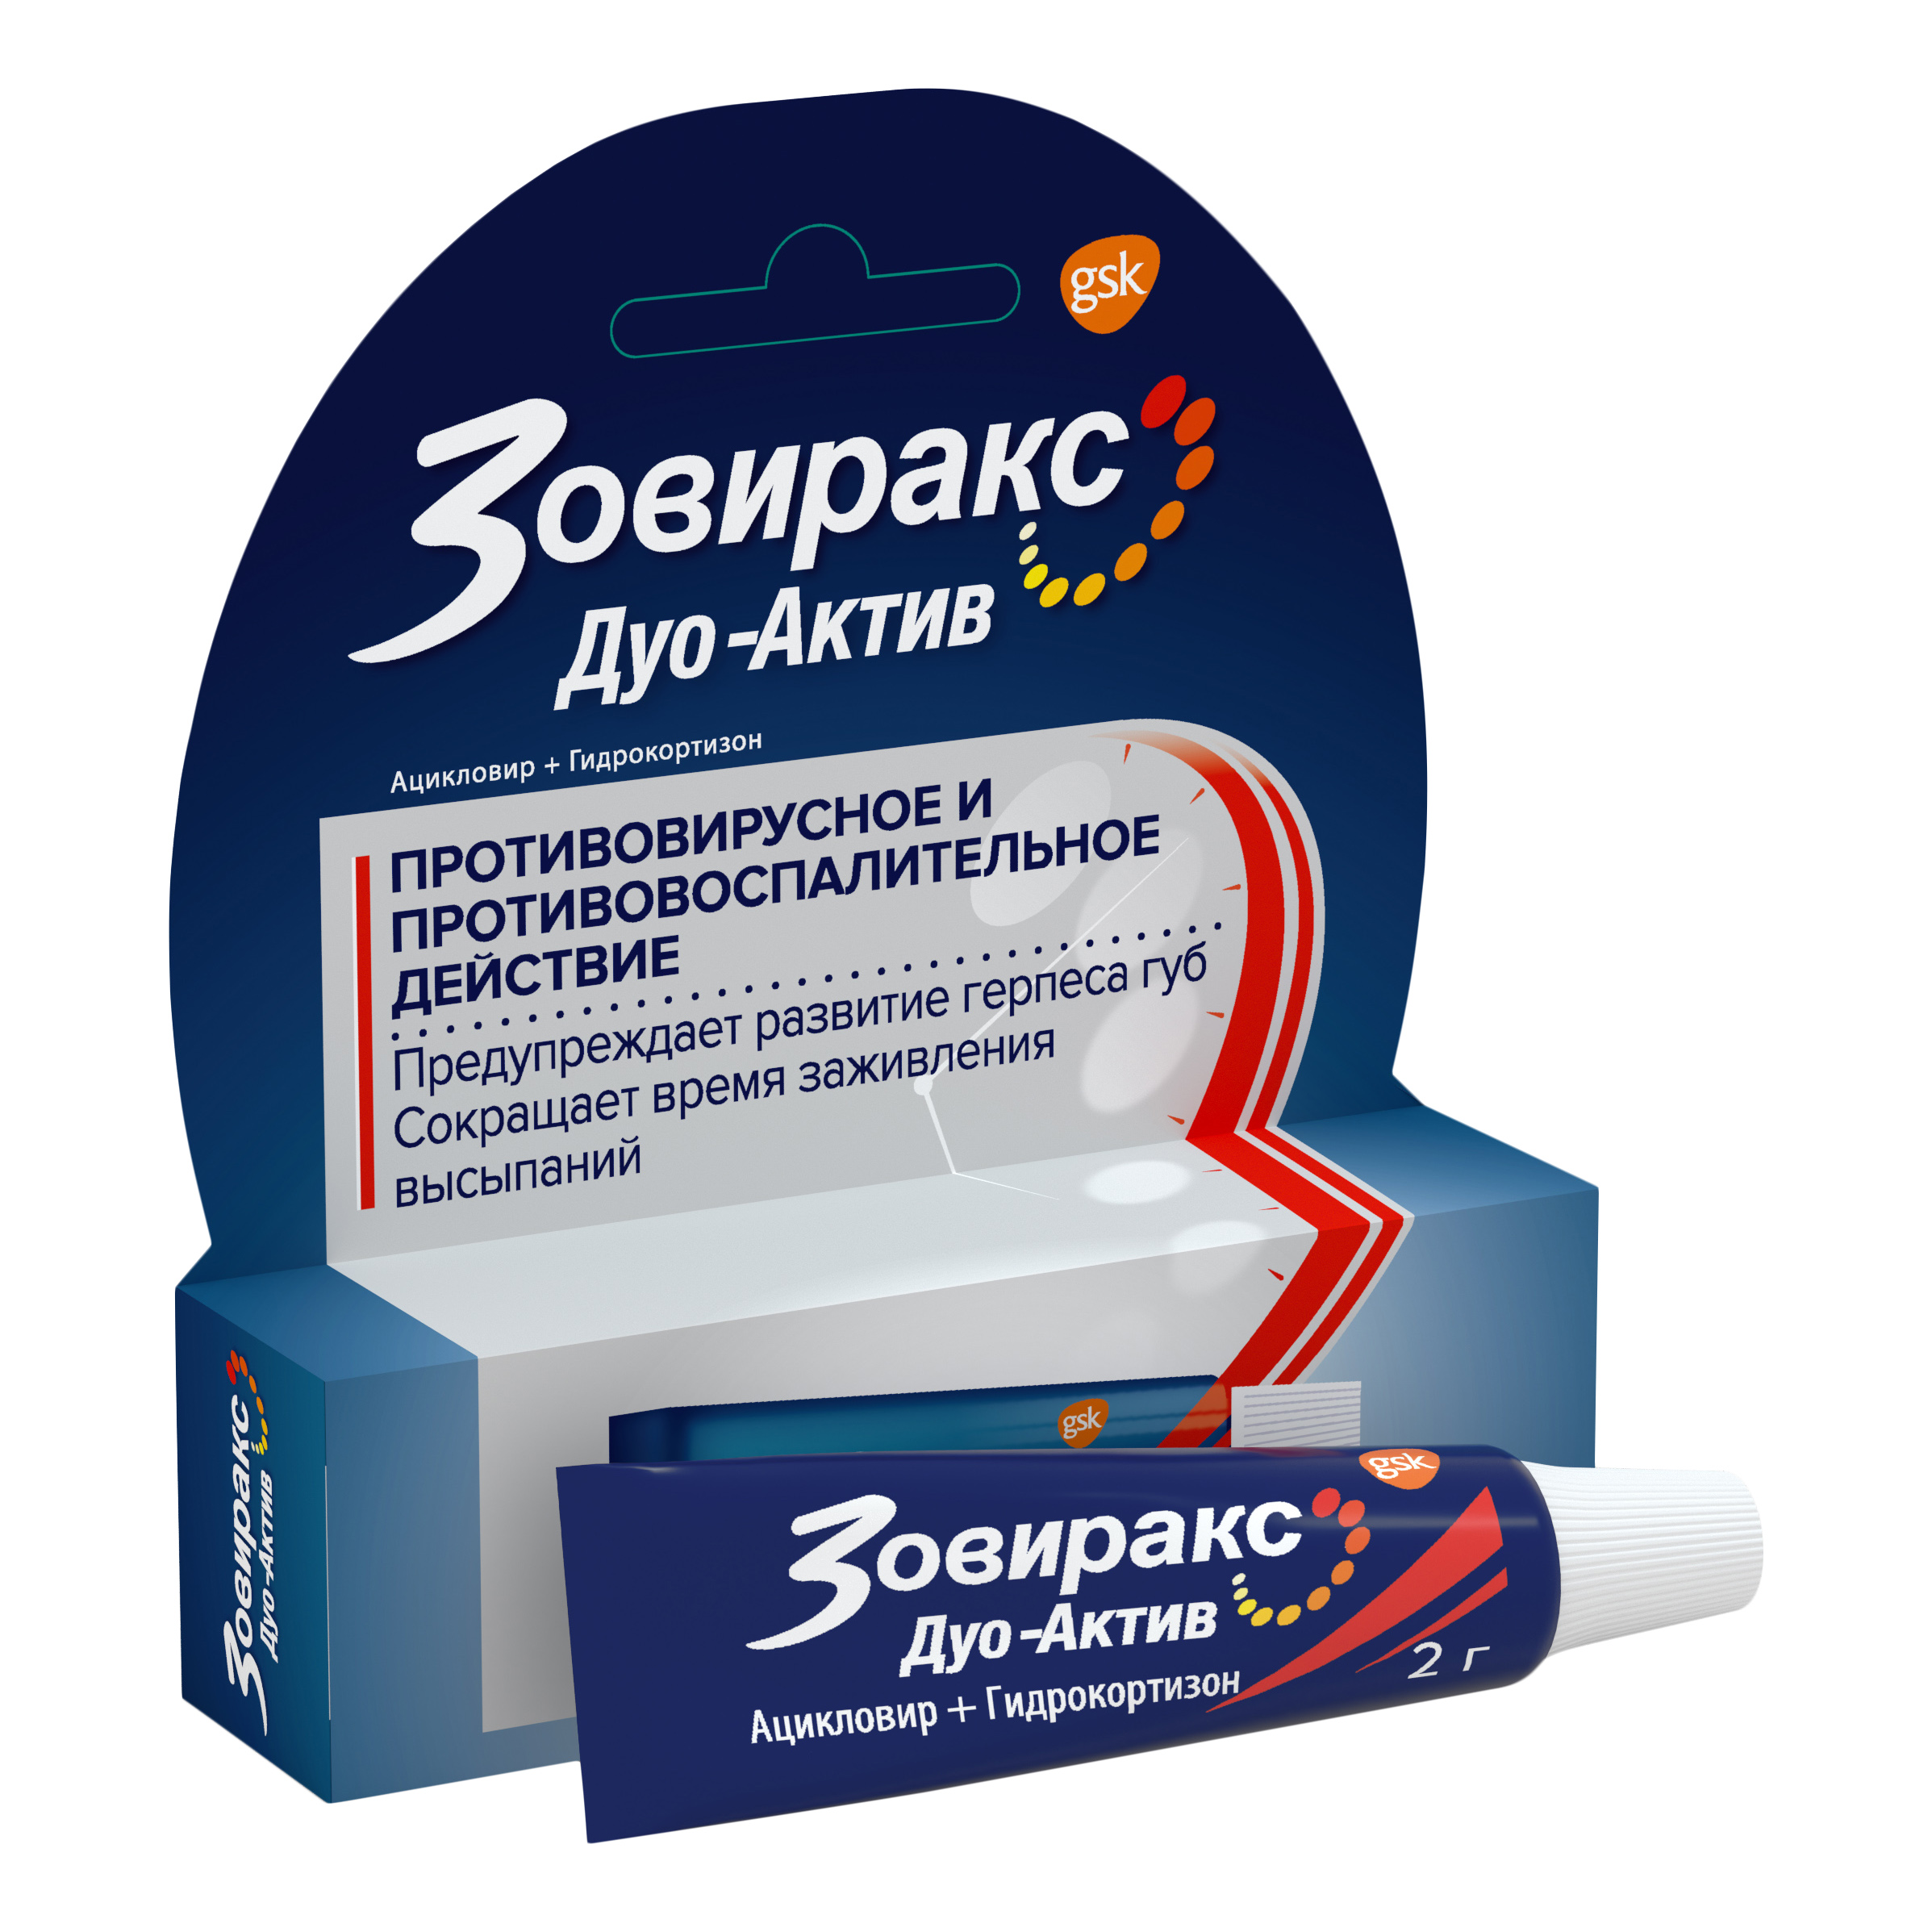 Зовиракс ДУО-АКТИВ крем от простуды на губах, противовирусное средство, ацикловир+гидрокортизон, 2 г ацикловир сандоз крем 5% 5г